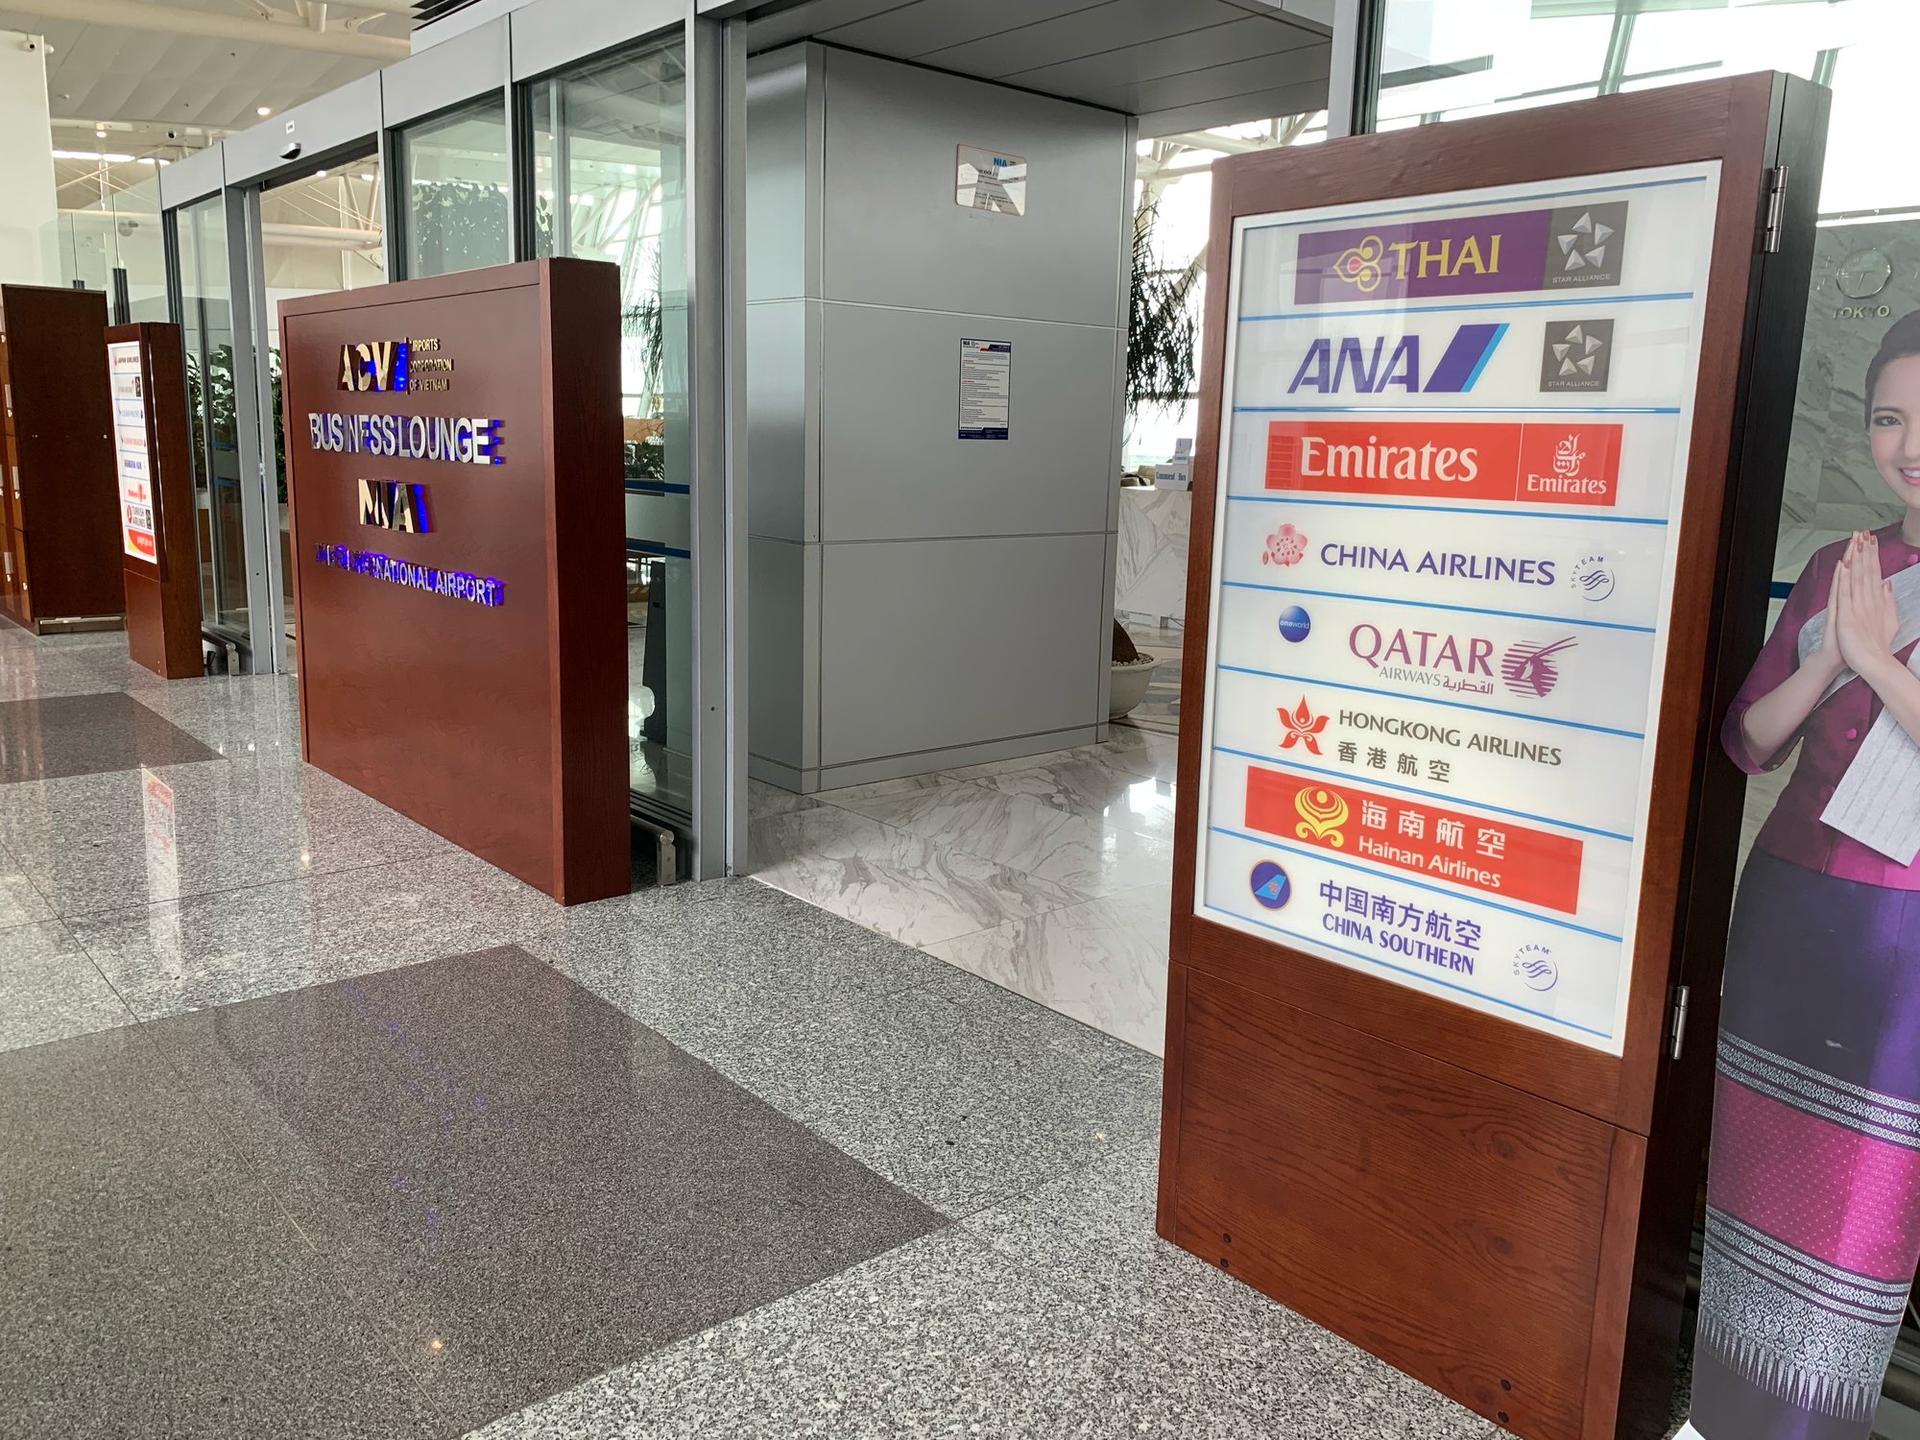 Noi Bai International Airport Business Lounge image 21 of 26